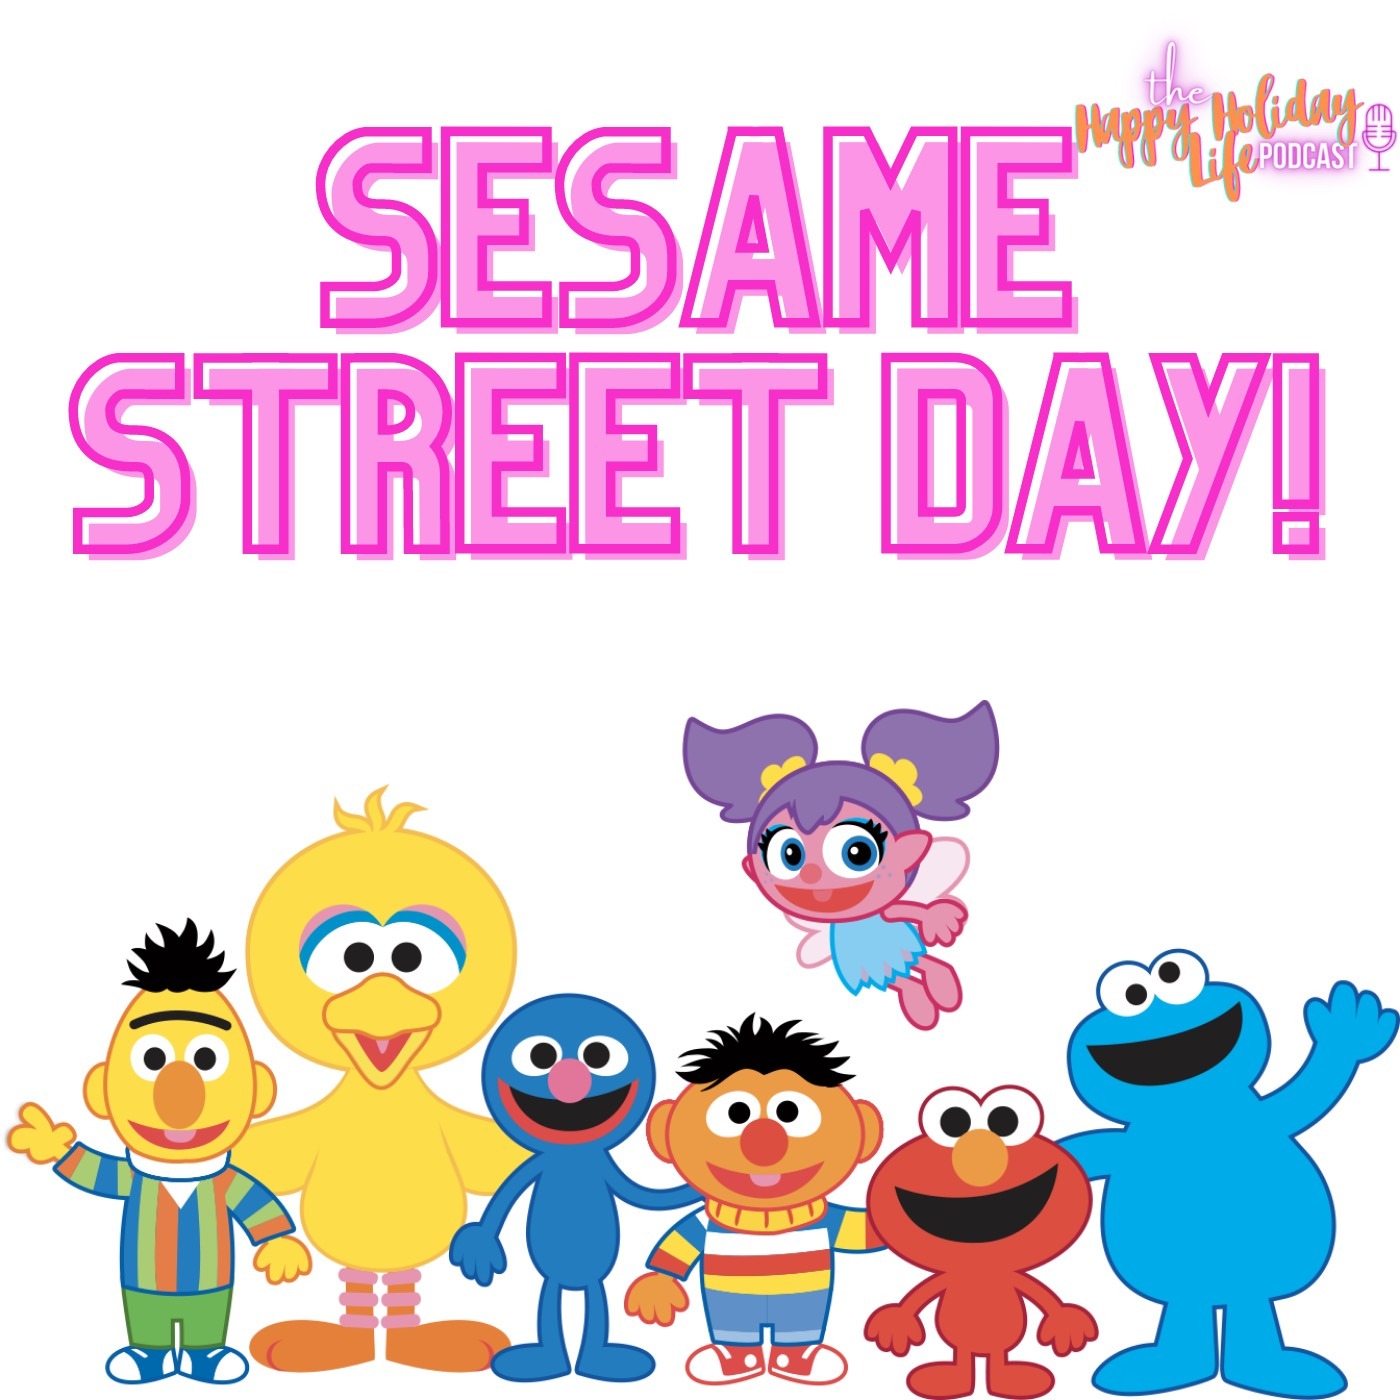 Episode #024 Sesame Street Day